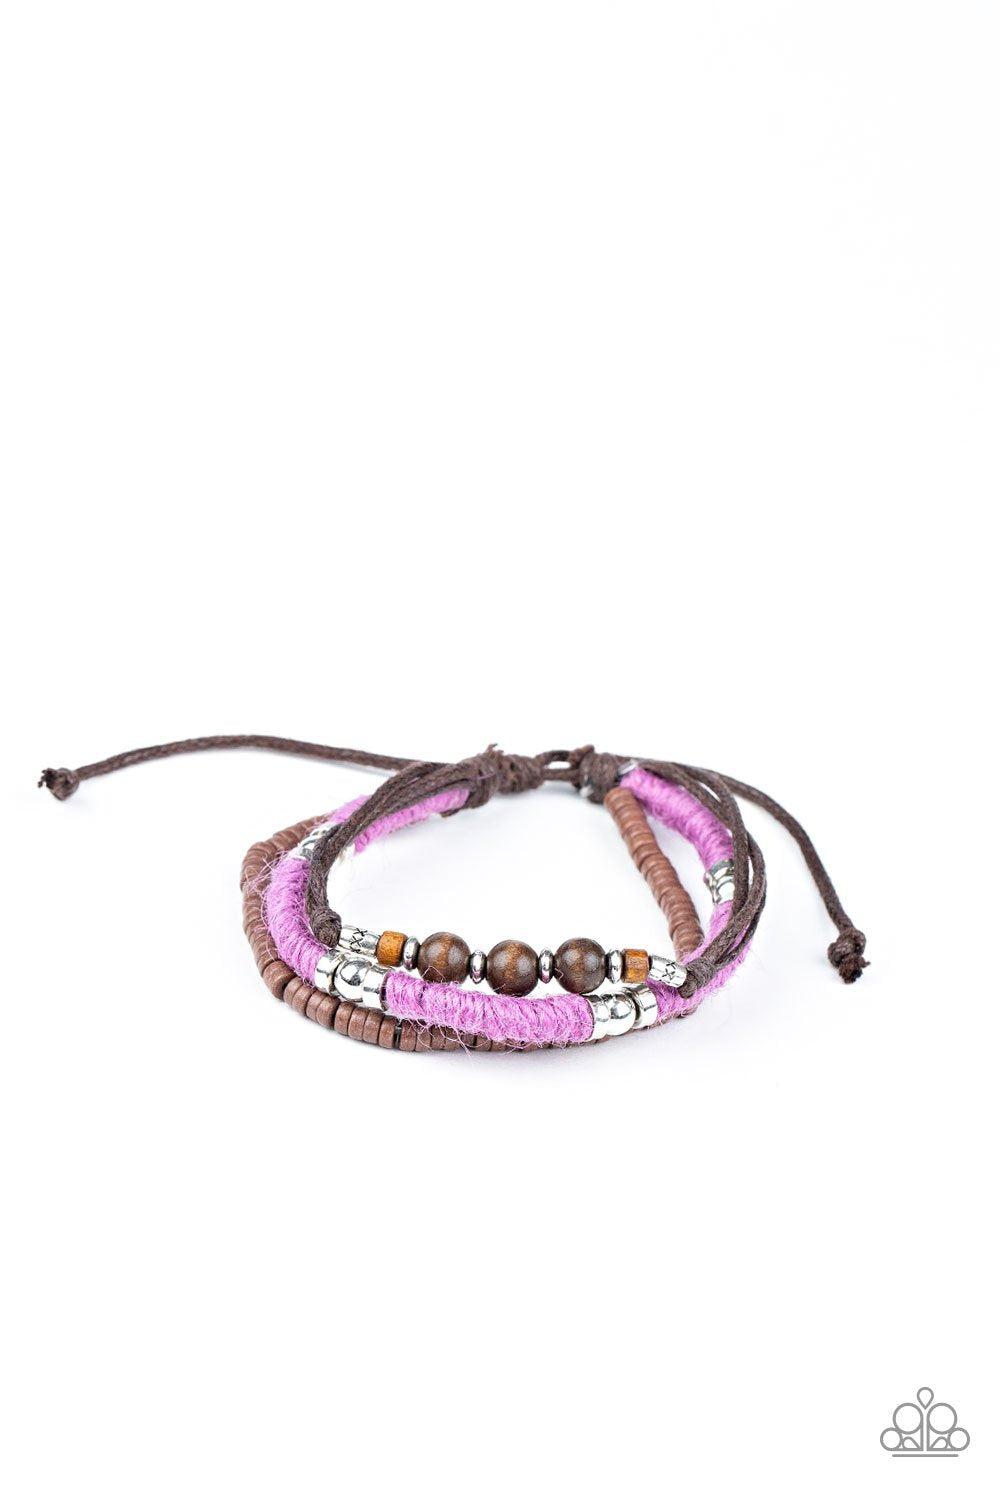 Totally Tiki Purple Urban Knot Bracelet - Paparazzi Accessories-CarasShop.com - $5 Jewelry by Cara Jewels